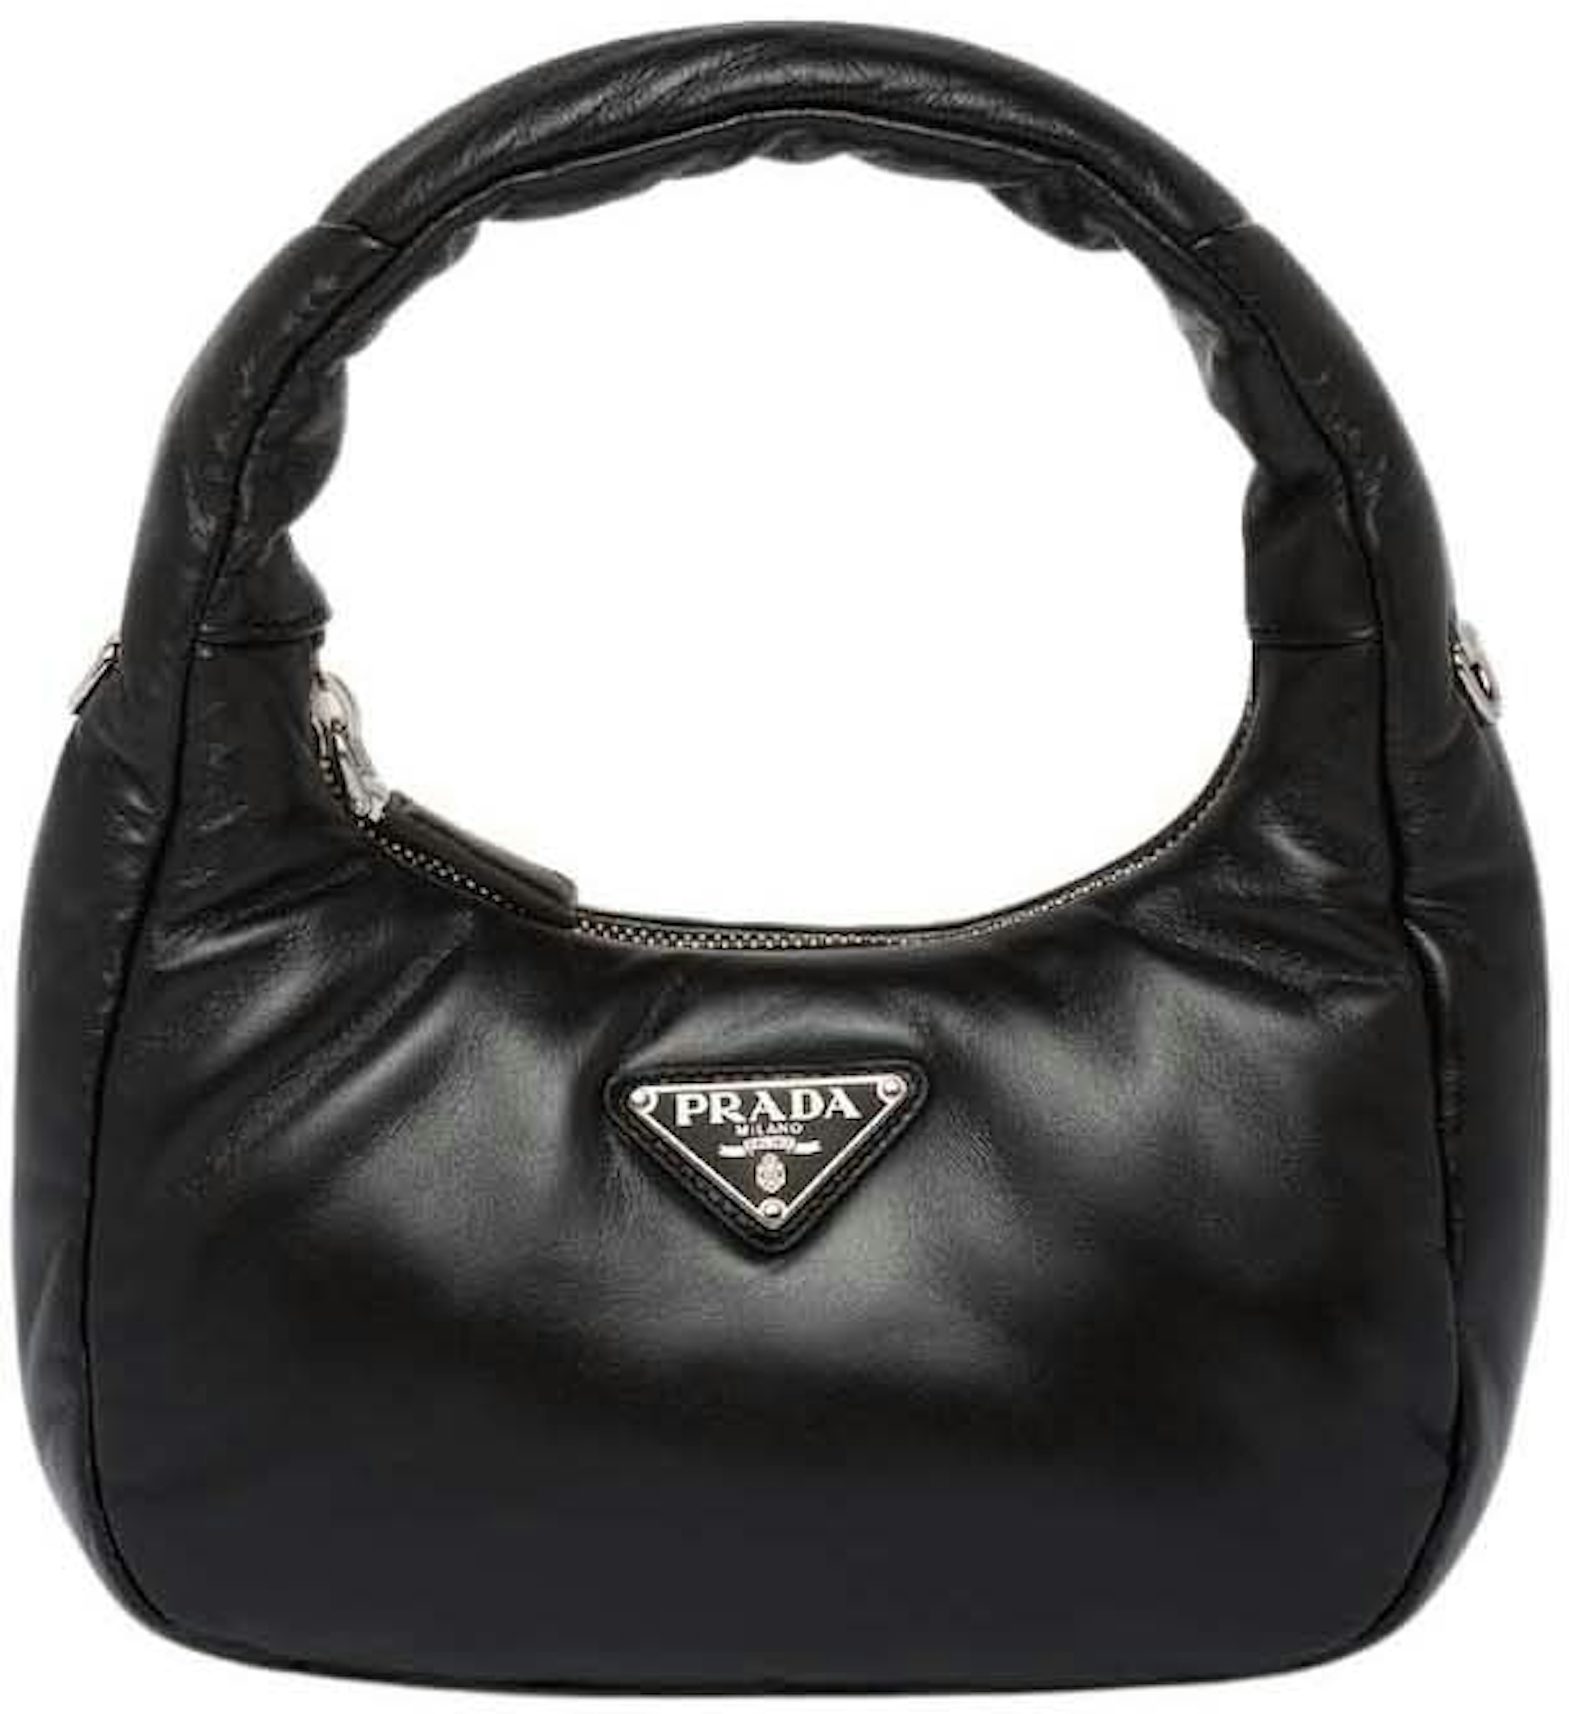 Geranium Pink Padded Nappa-leather Prada Re-edition 2005 Shoulder Bag